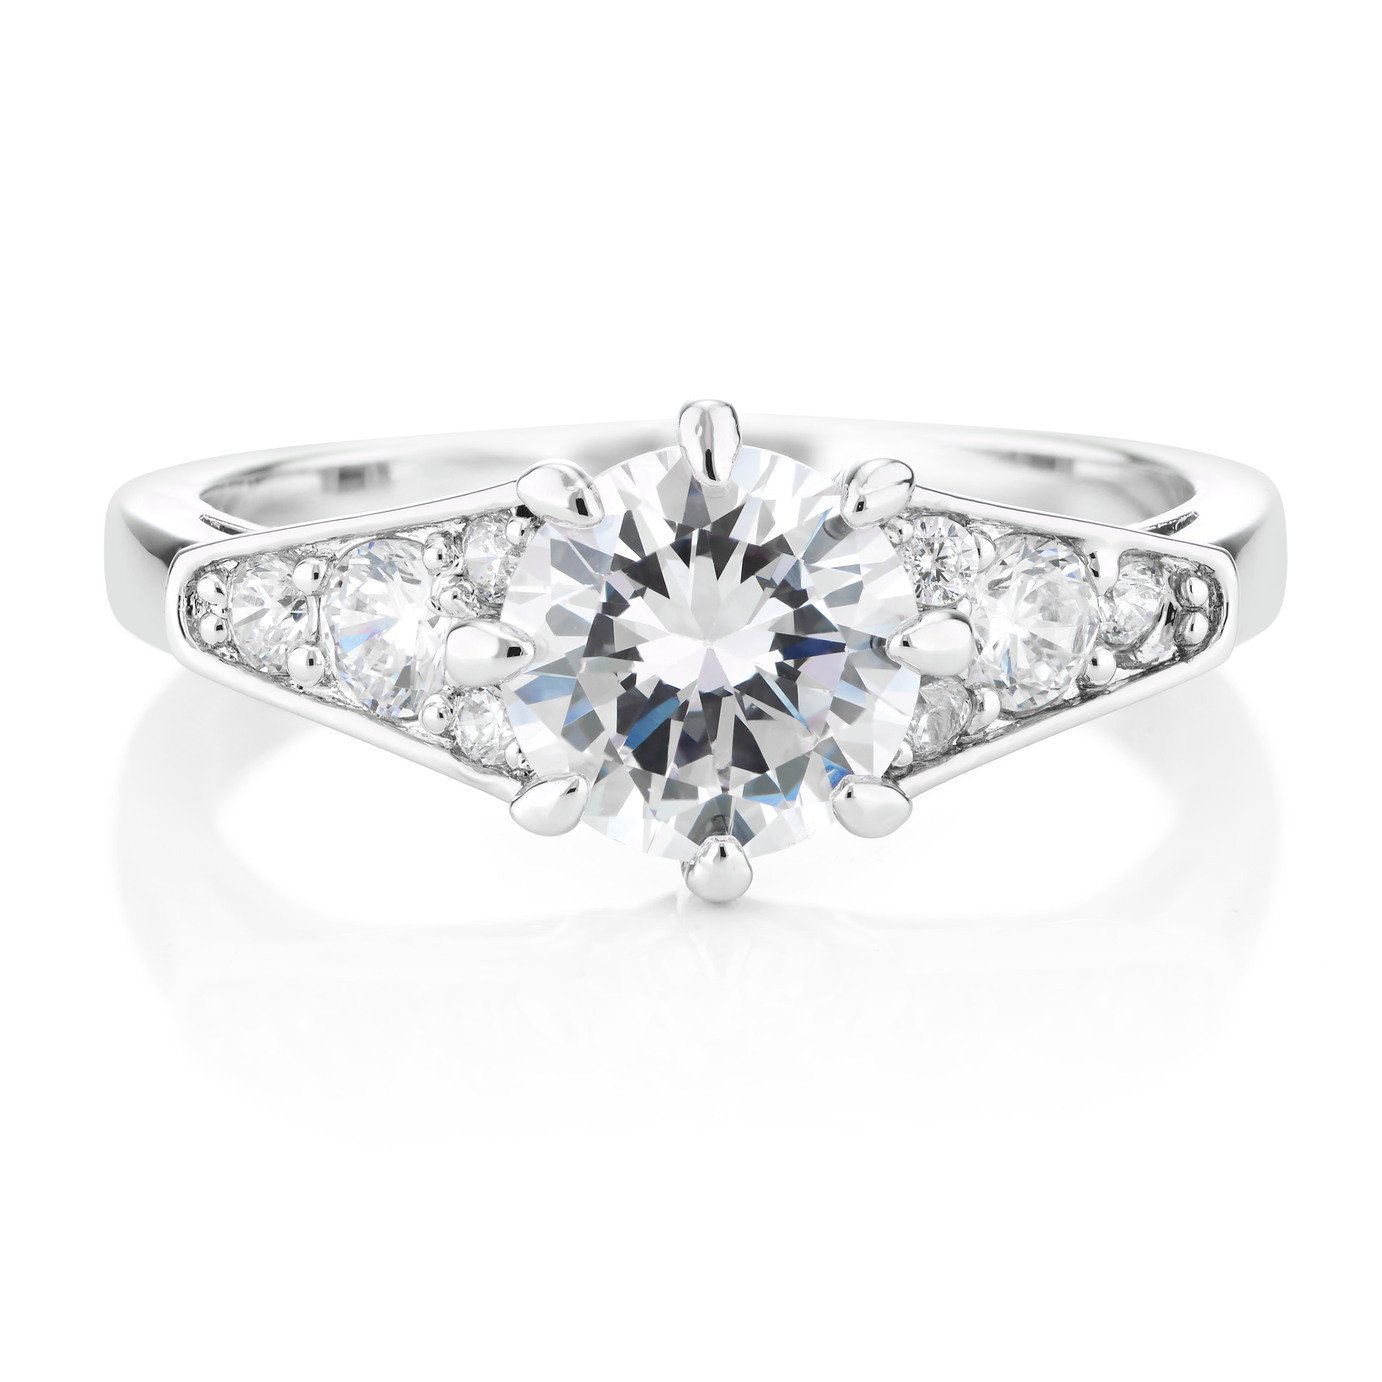 Buckley Royal Collection Queen Elizabeth II Ring Review